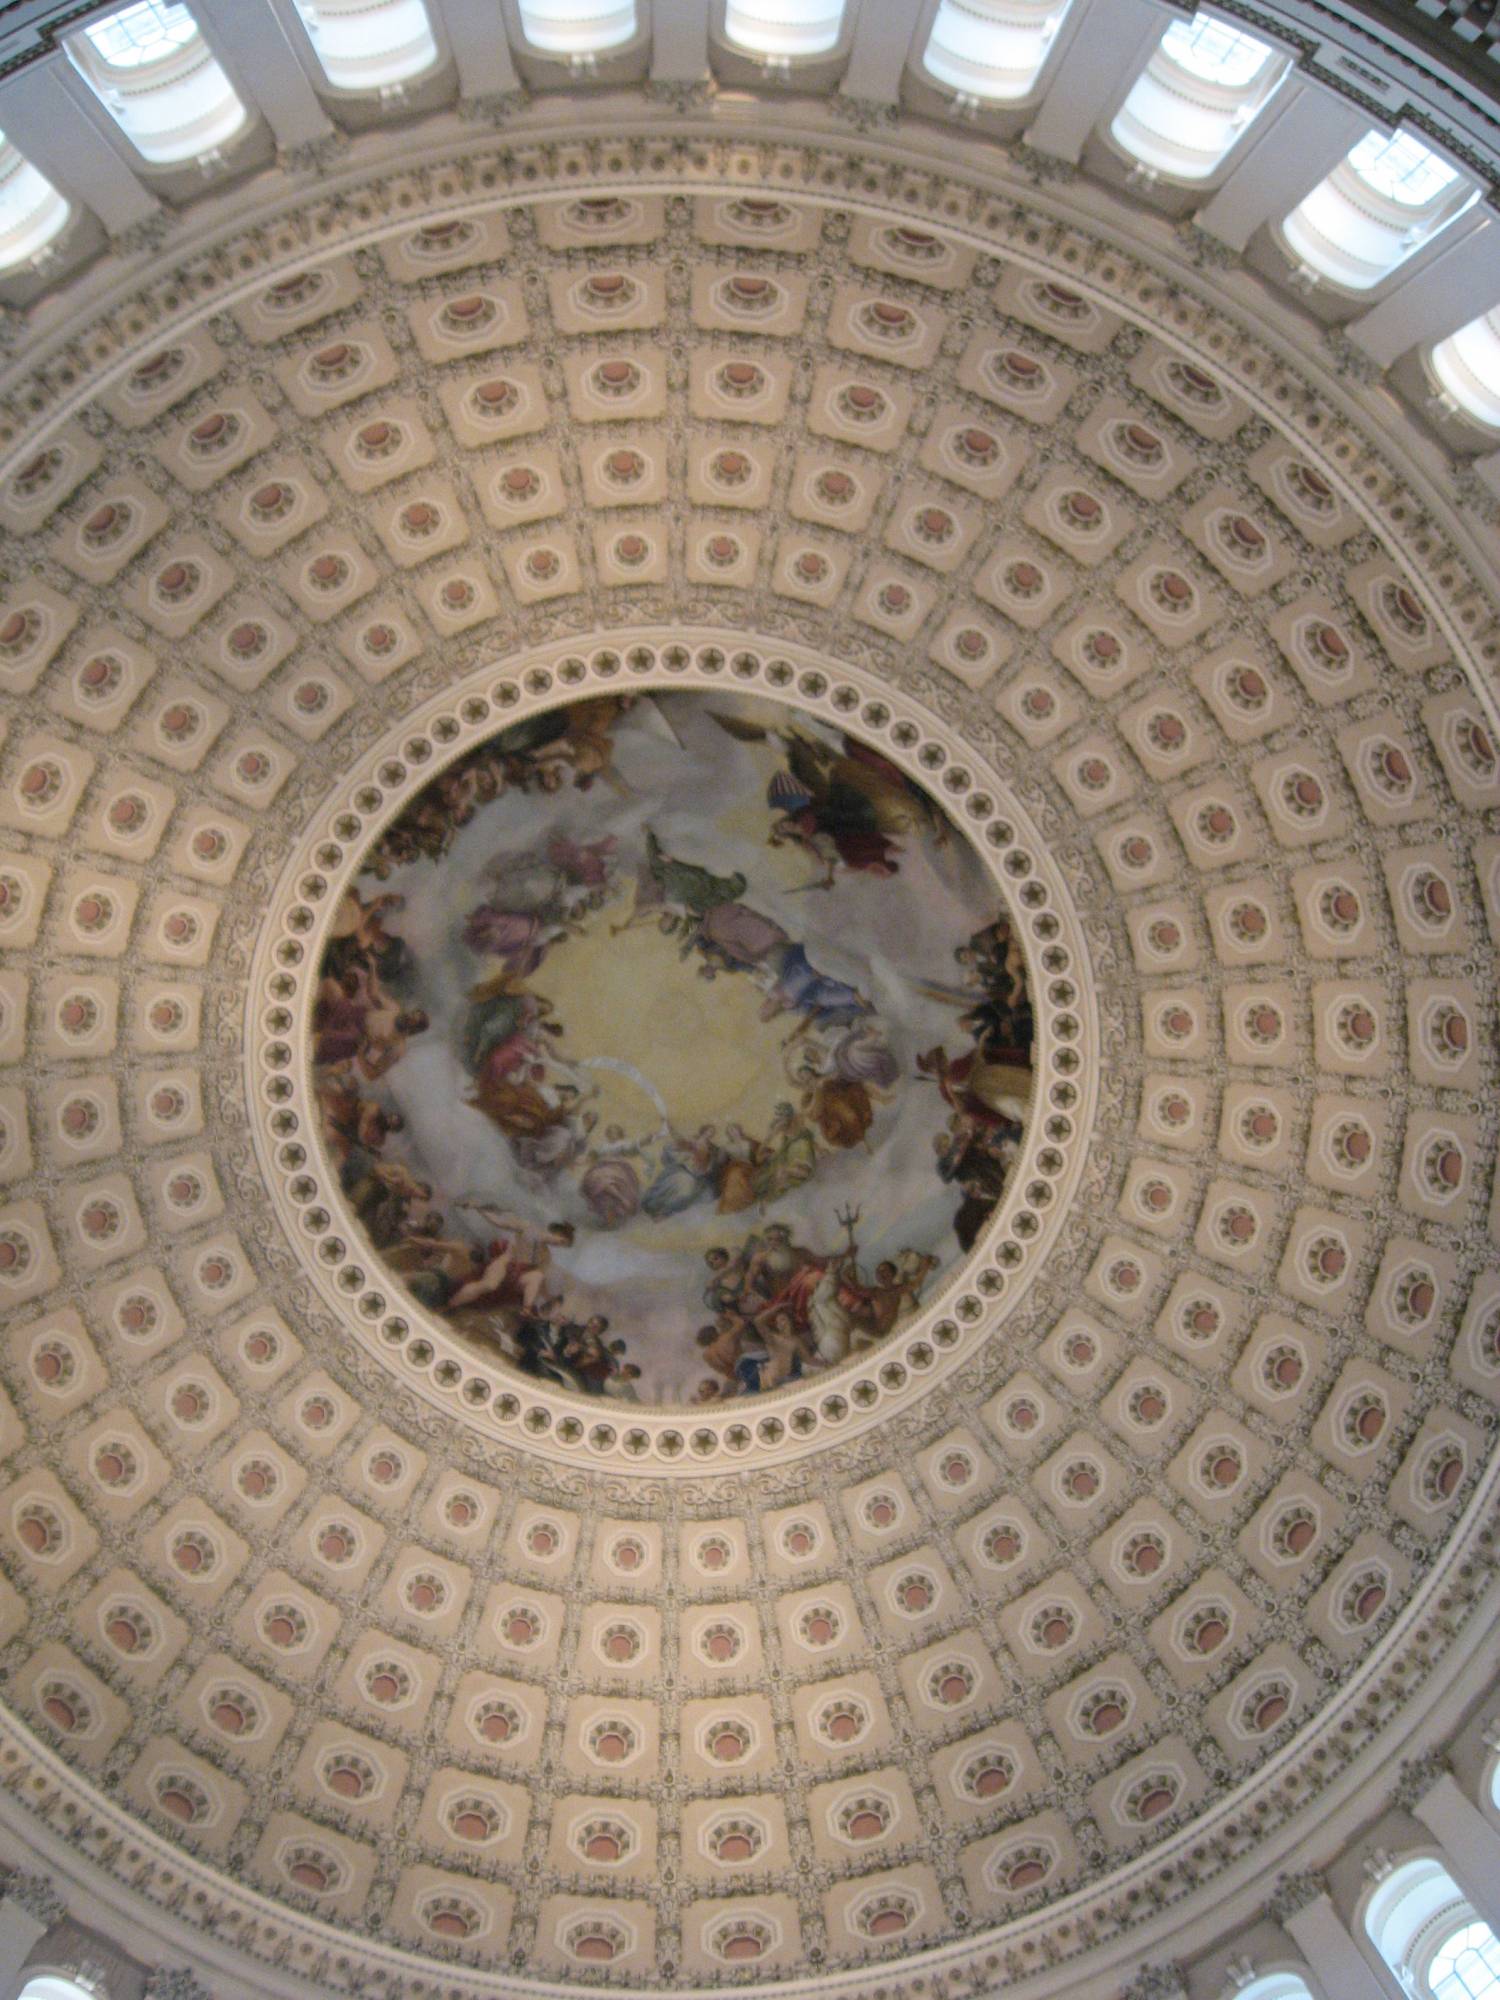 Washington D.C. - U.S. Capitol dome